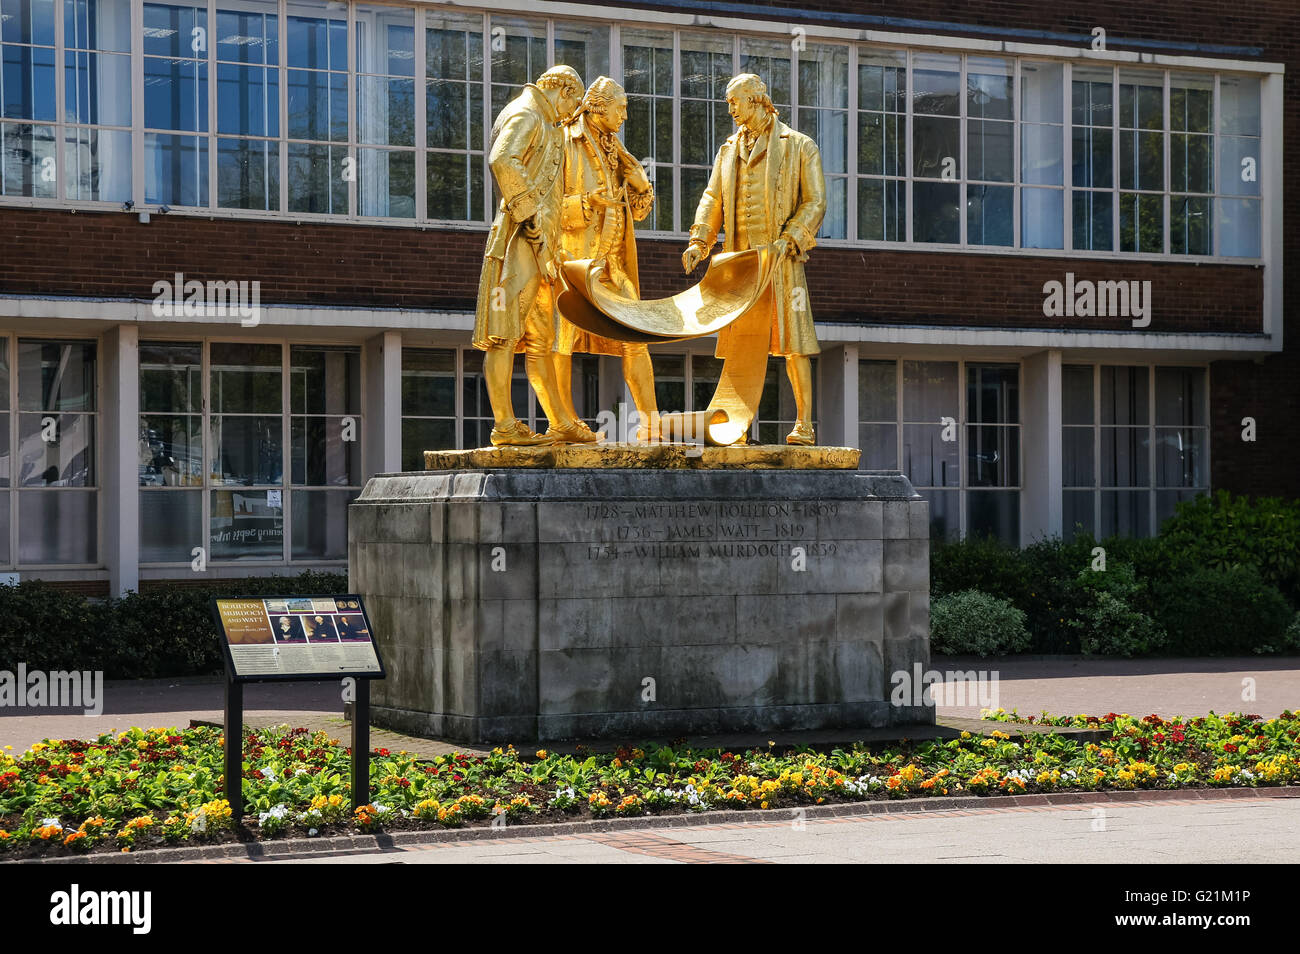 The gilded bronze statue of Matthew Boulton, James Watt and William Murdoch by William Bloye on Broad Street in Birmingham, UK Stock Photo